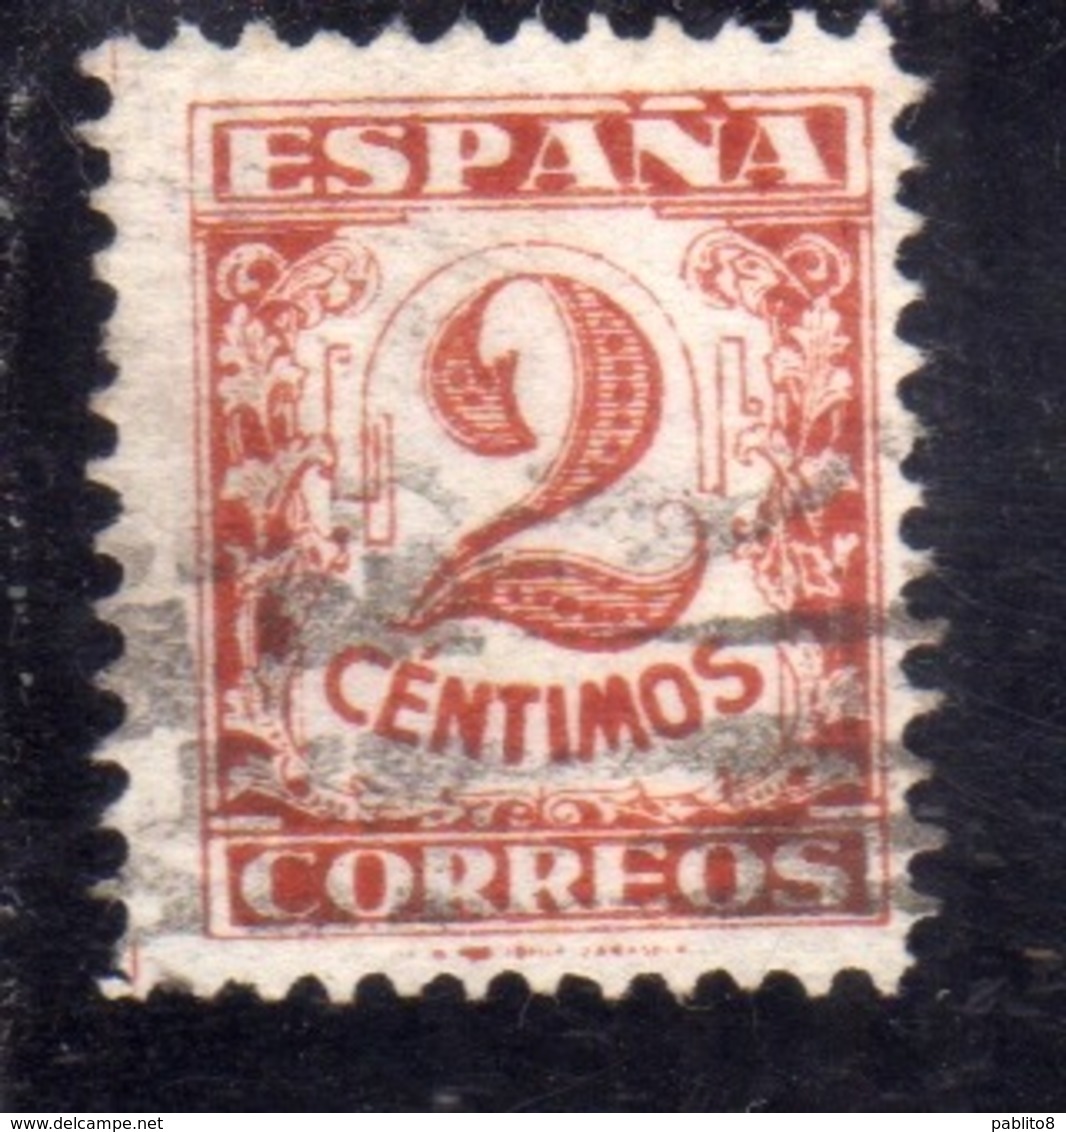 SPAIN ESPAÑA SPAGNA 1936 NUMERAL CIFRA CENT. 2c USED USATO OBLITERE' - Gebraucht